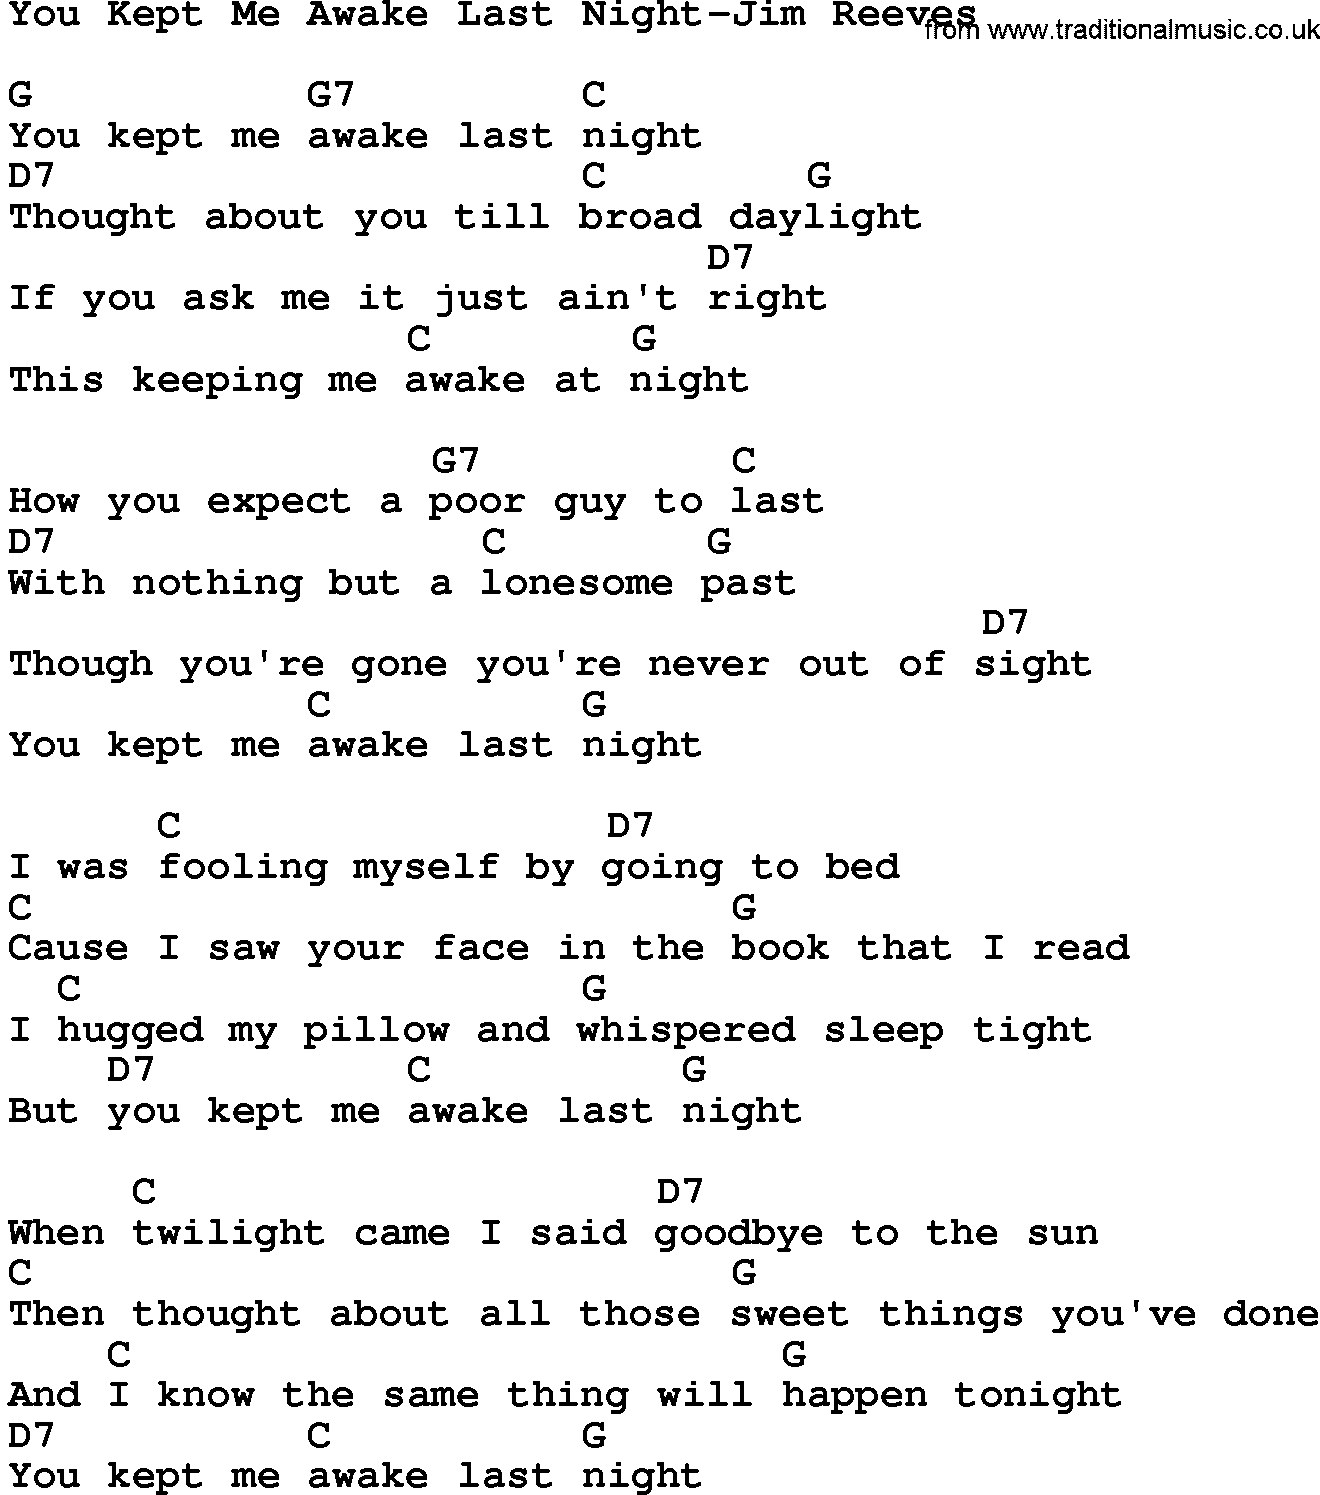 Country music song: You Kept Me Awake Last Night-Jim Reeves lyrics and chords